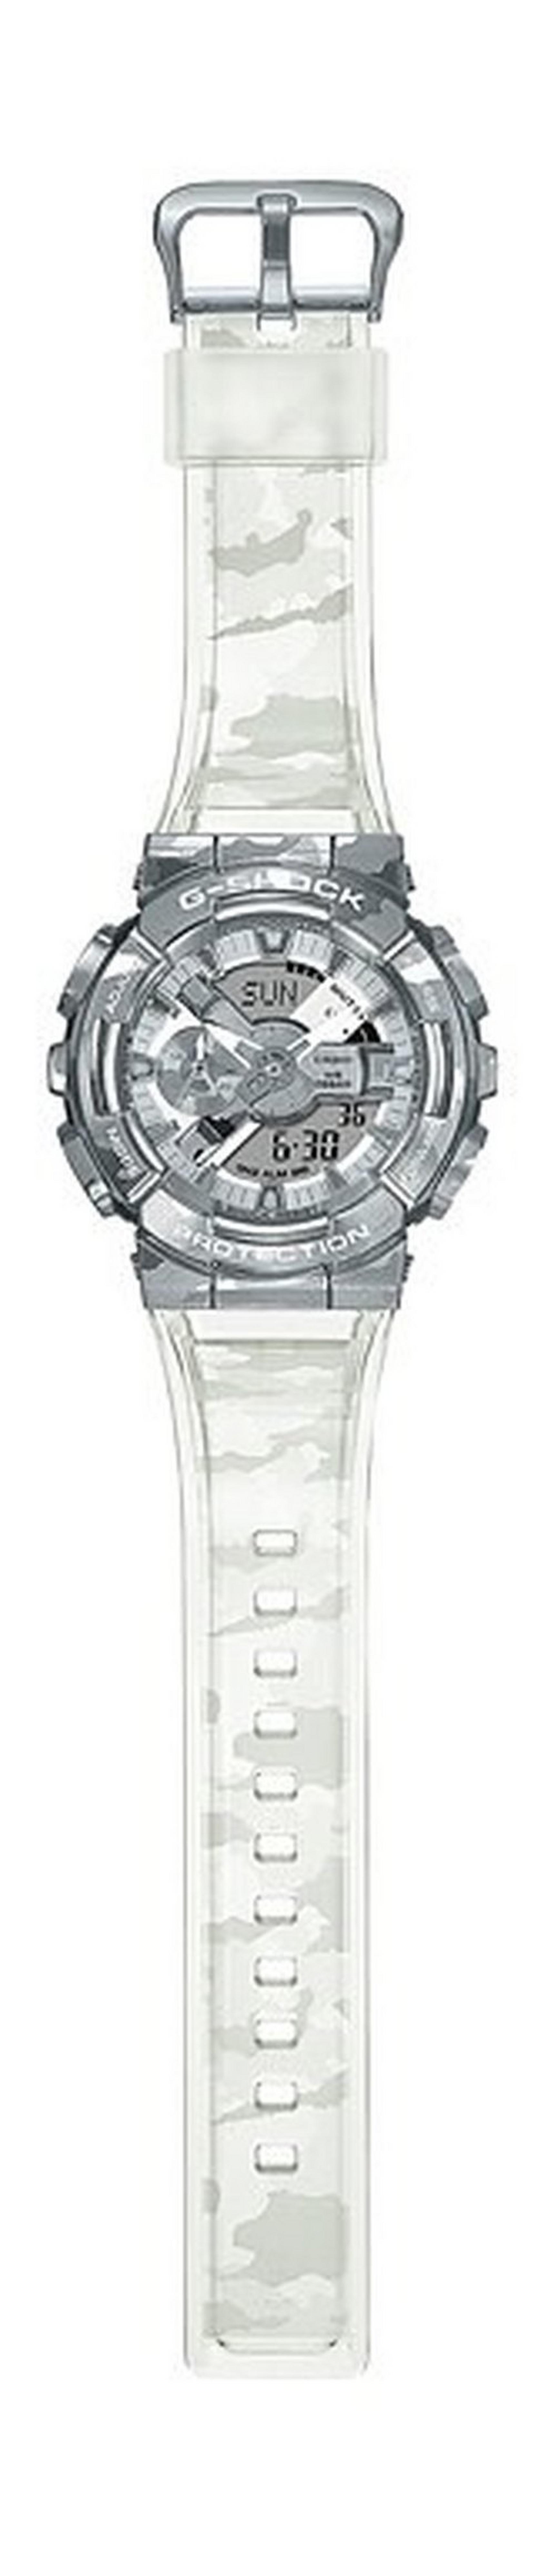 Casio G-Shock 52mm Gent's Casual Watch - (GM-110SCM-1ADR)